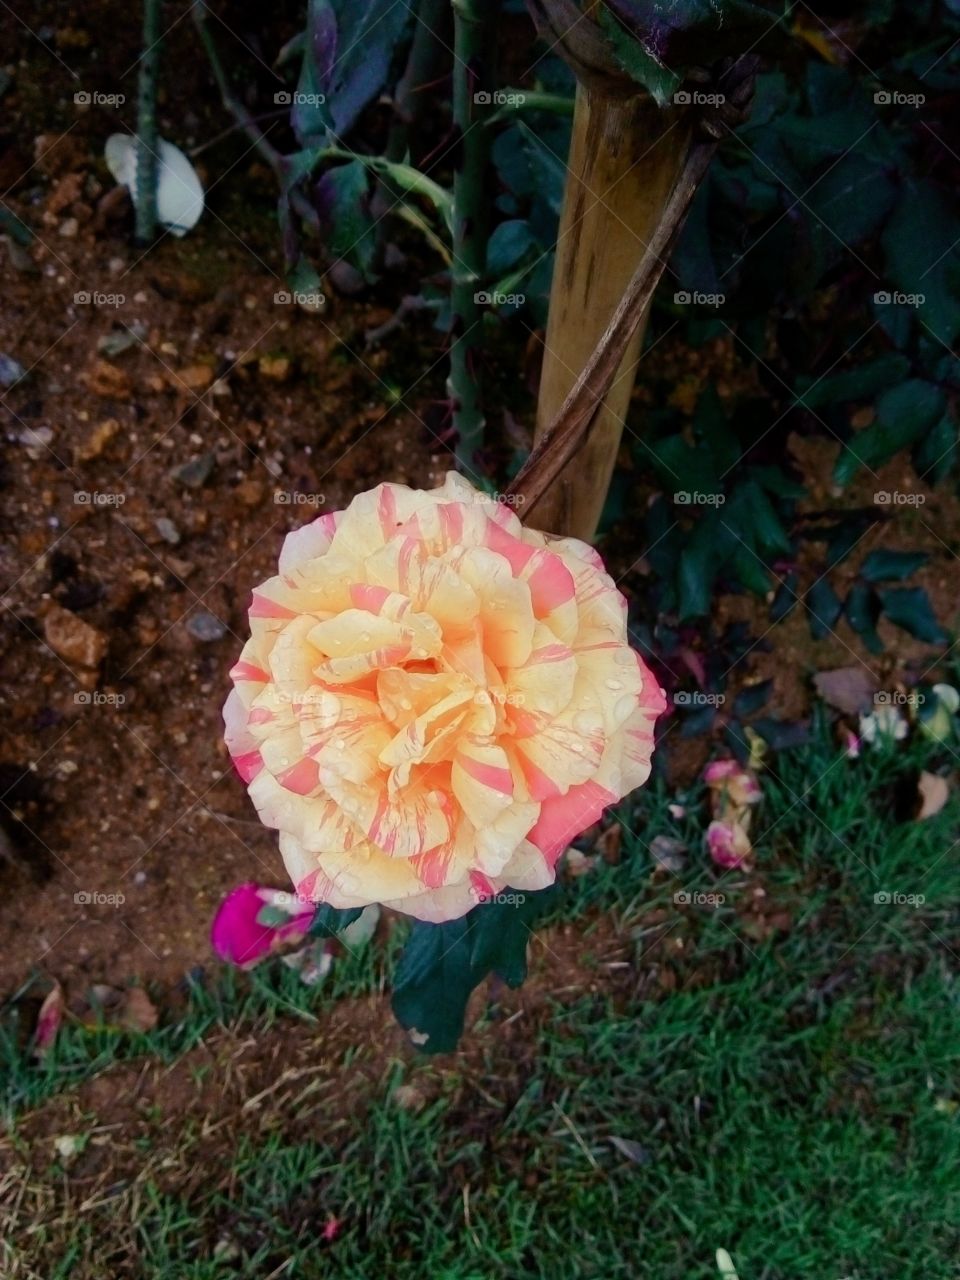 beutifful yellow rose